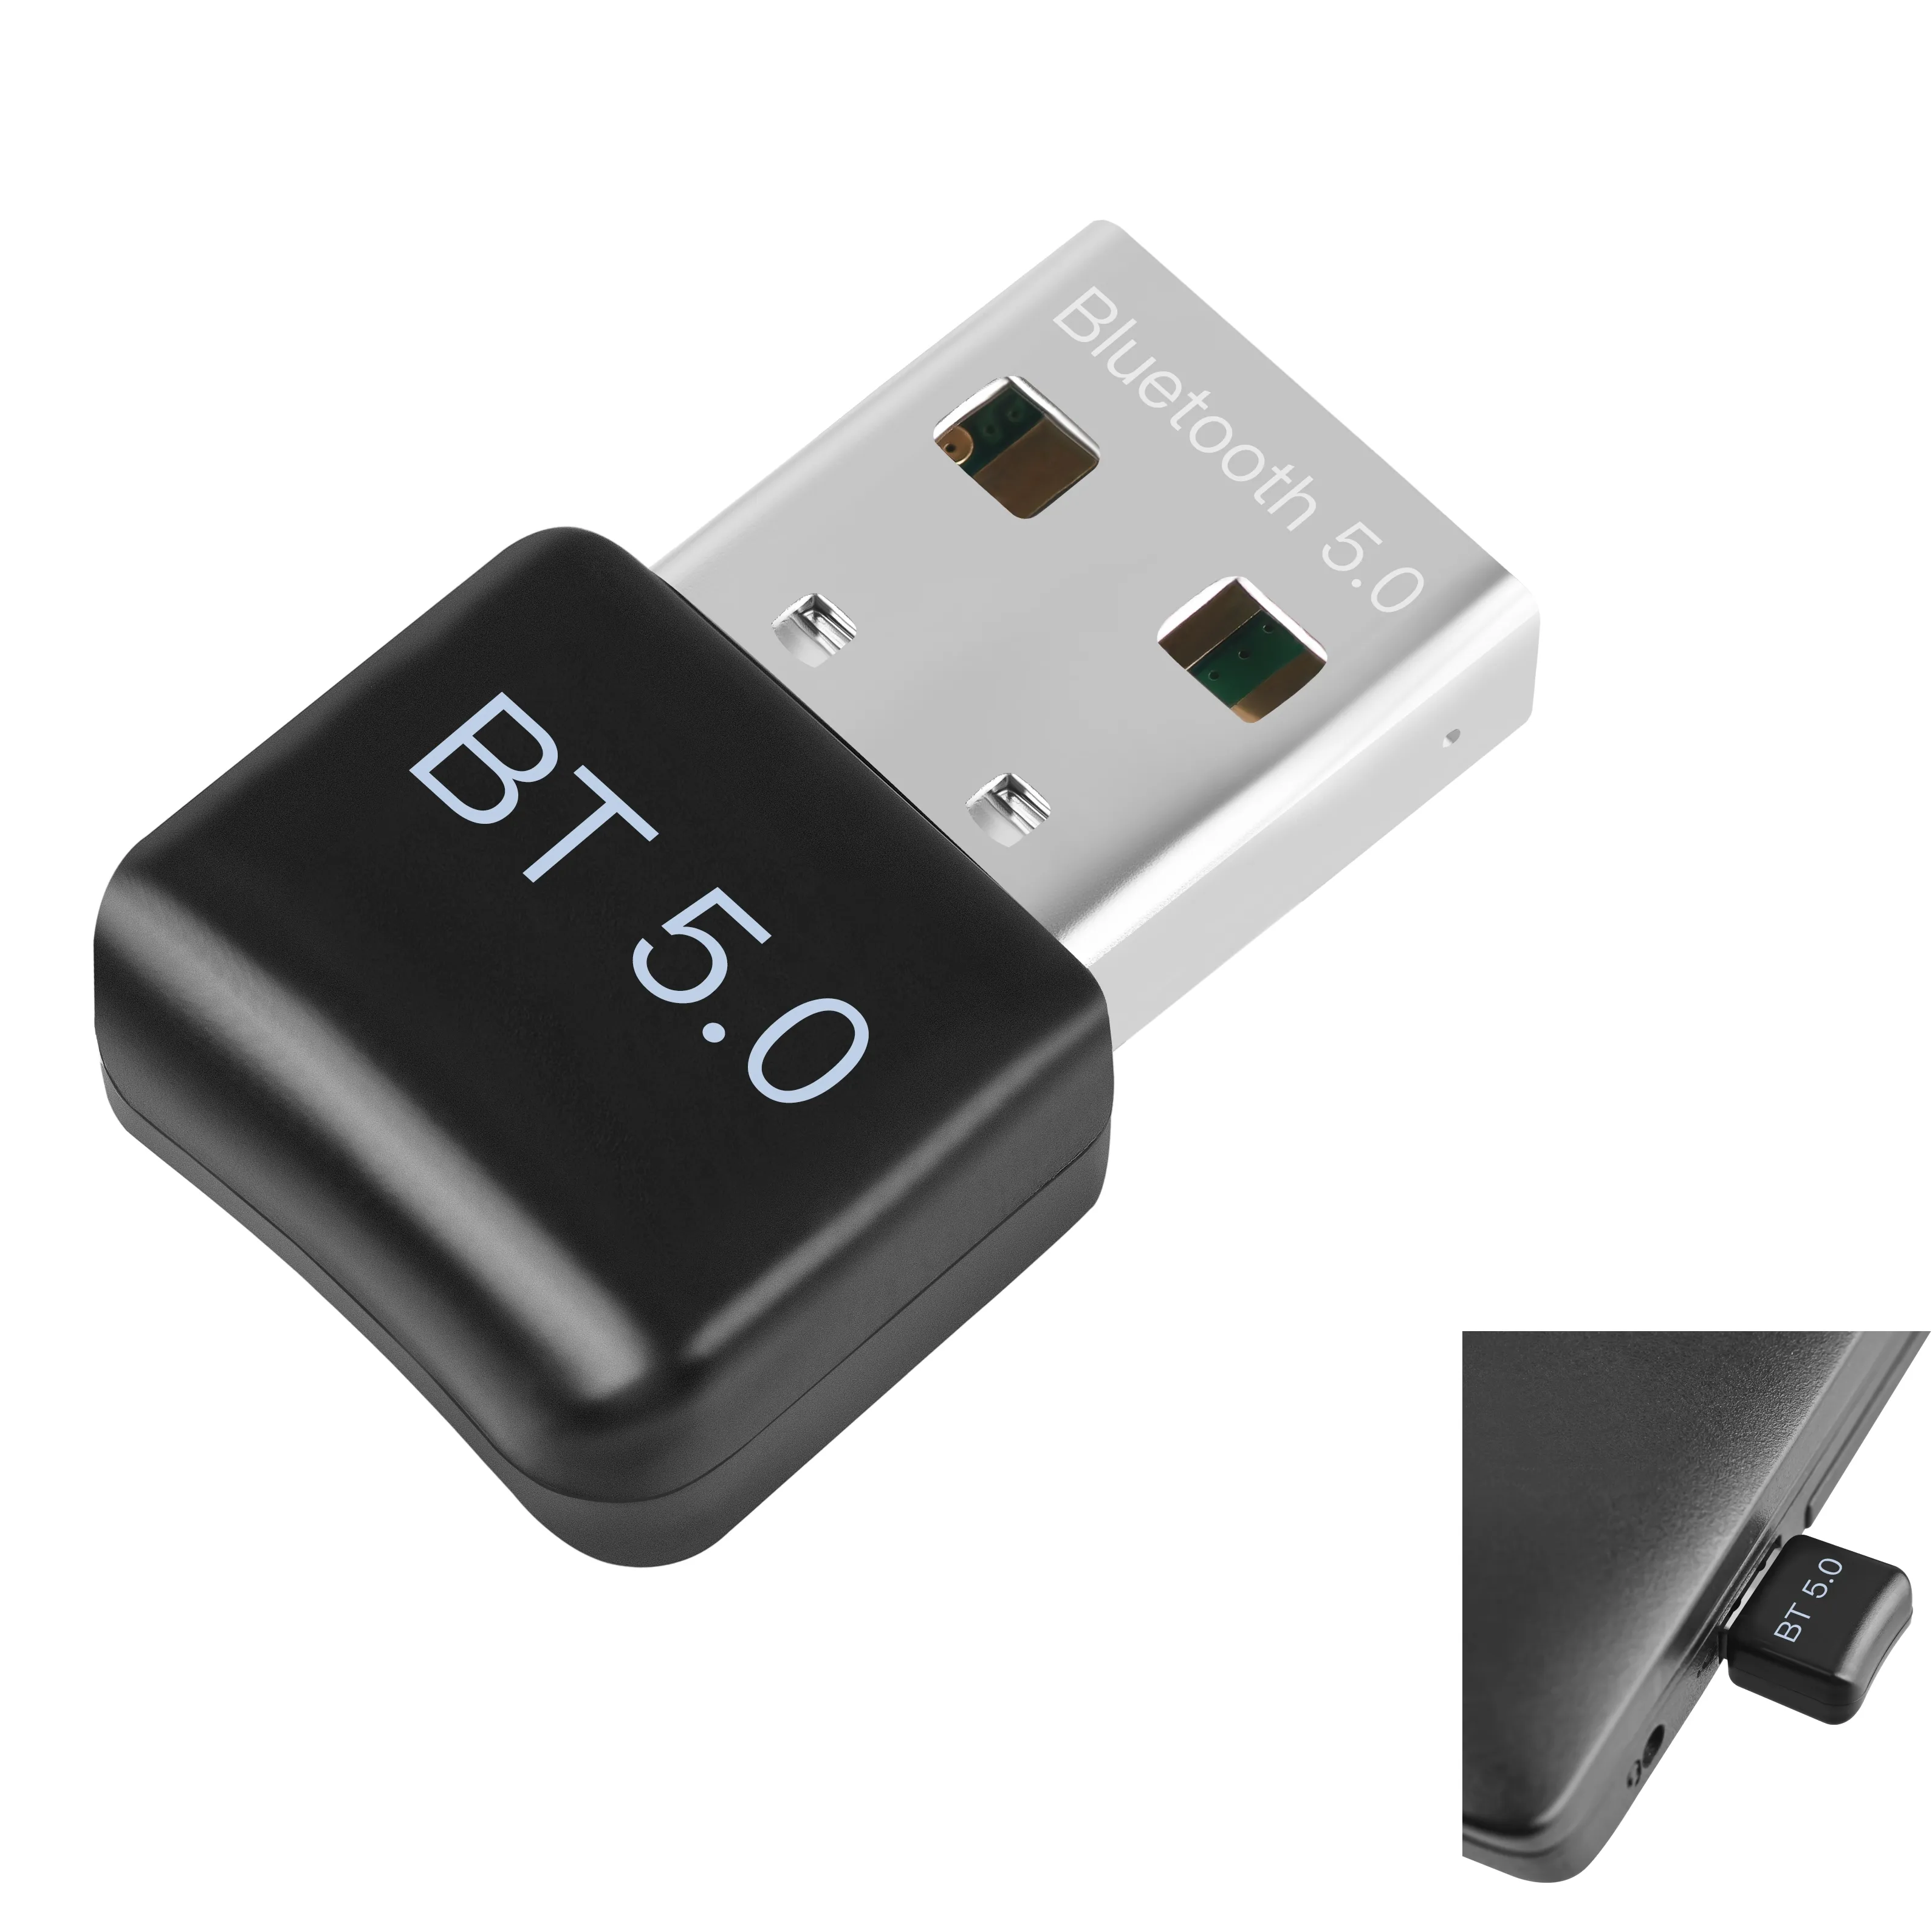 RTL8761B Bluetooth BT5.0 için kablosuz USB dongle adaptörü bilgisayar masaüstü Bluetooth hoparlör, kulaklık, klavye, fare